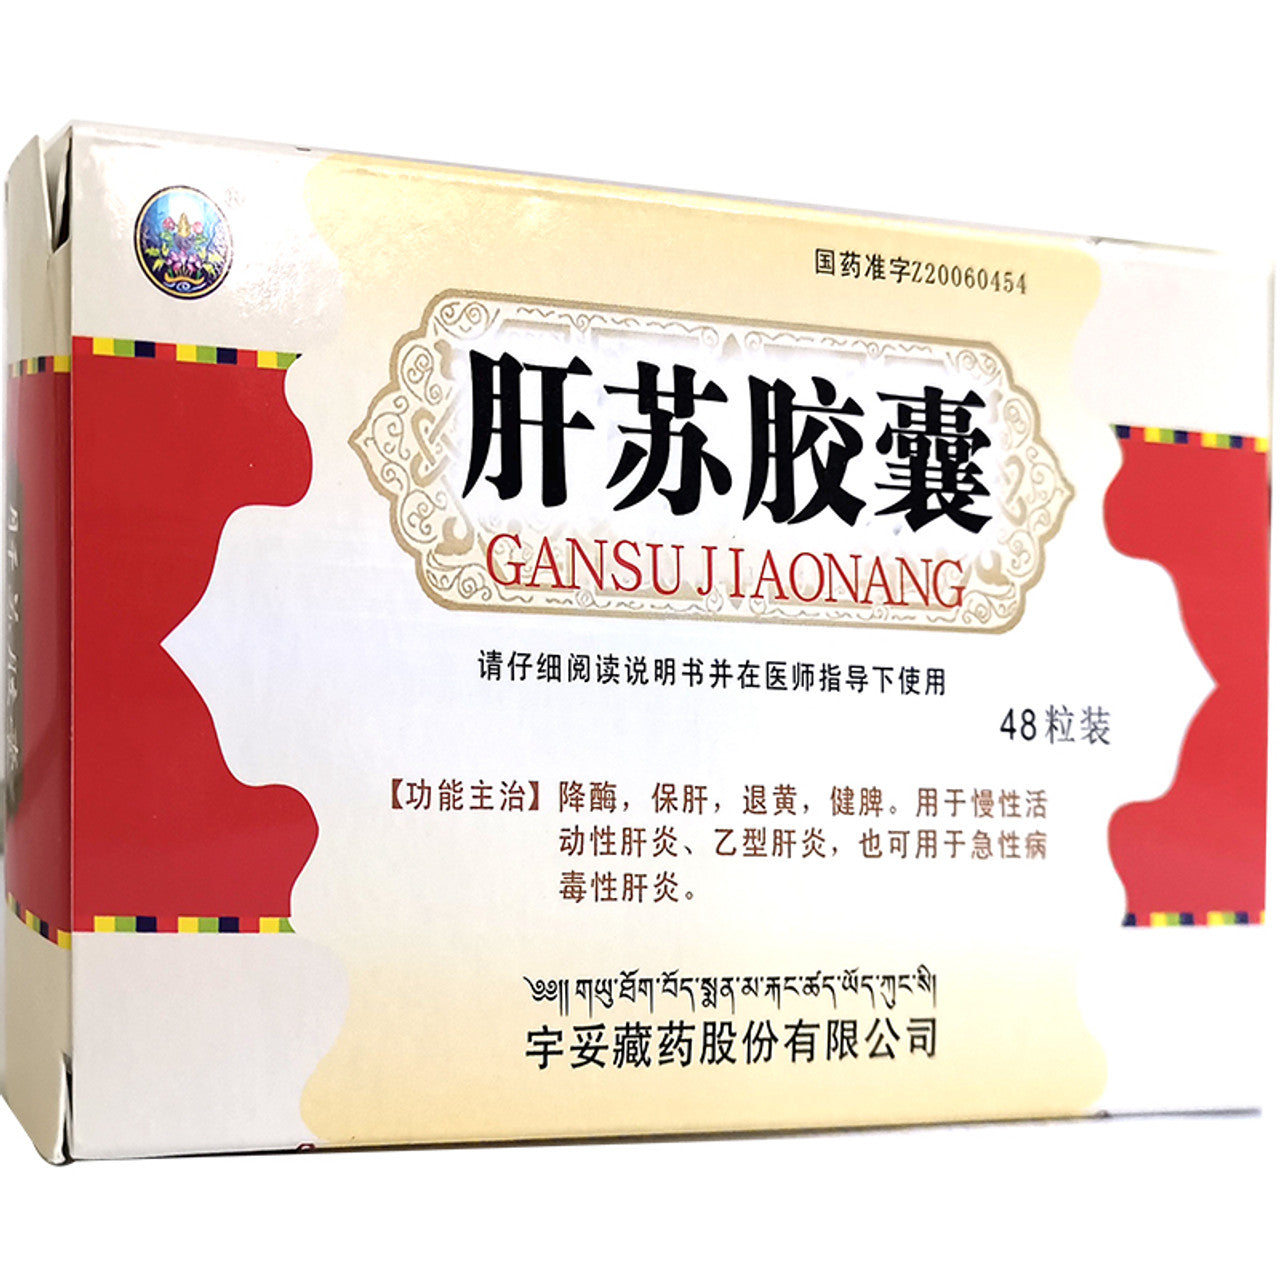 China Herb. Brand YUTUO. Gansu Jiaonang or Gan Su Jiao Nang or Gansu Capsule for chronic active hepatitis, hepatitis B, and also for acute viral hepatitis.